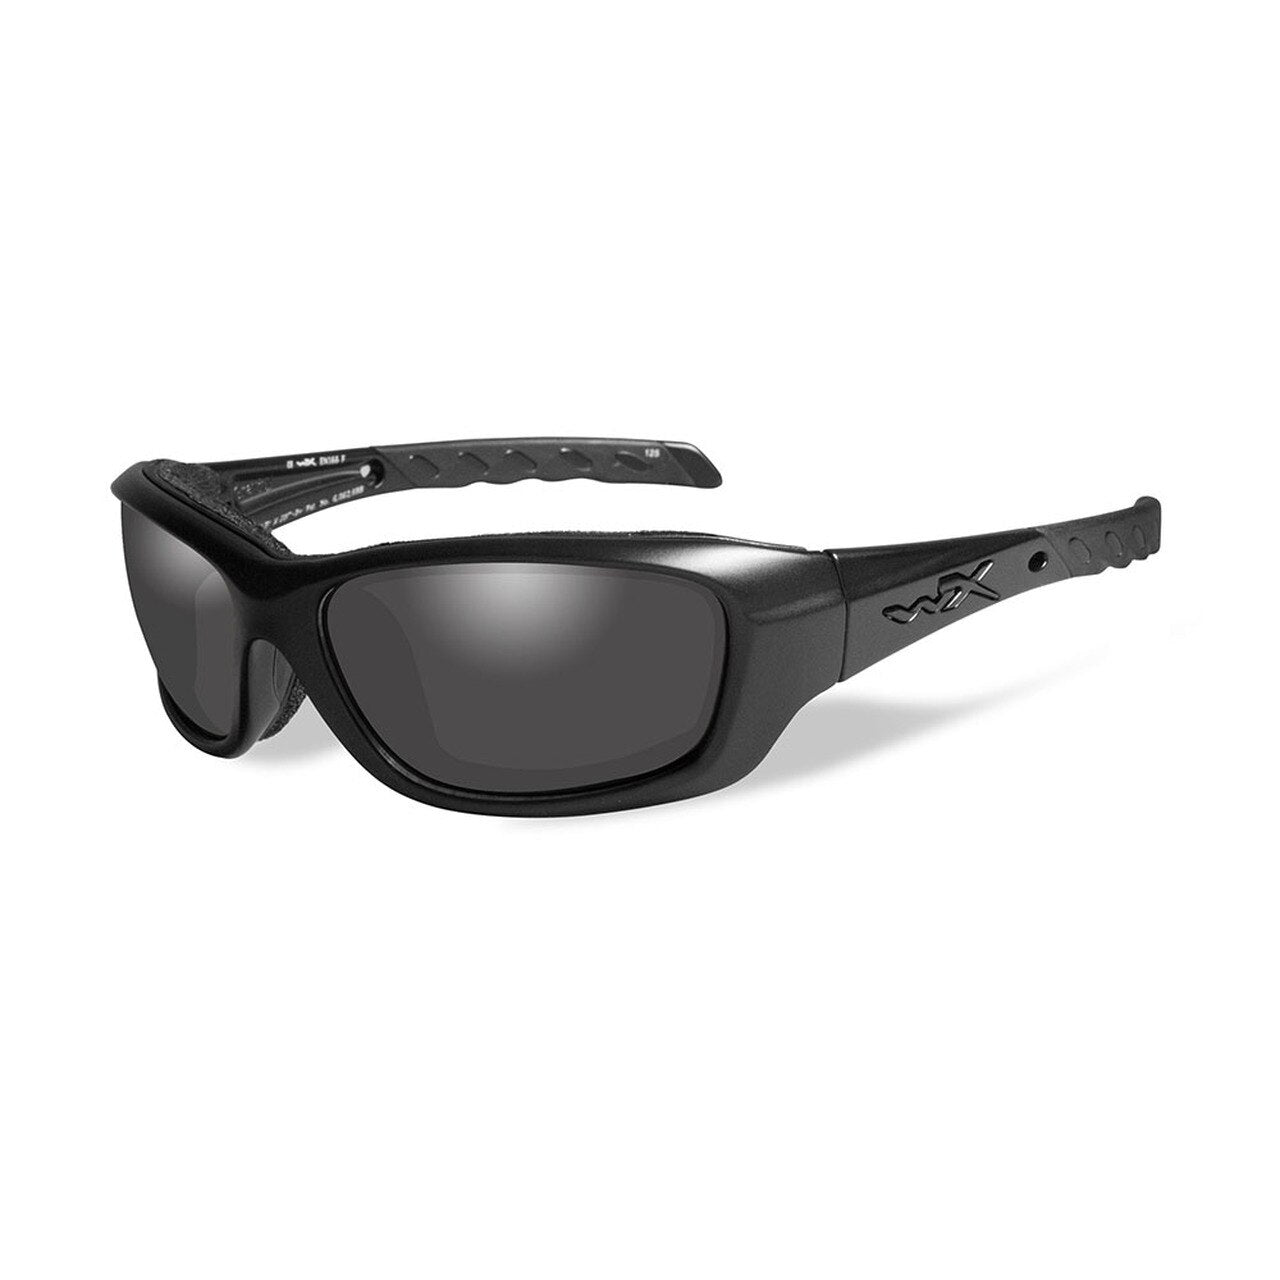 Wiley X Gravity Sunglasses Smoke Grey Lens Matte Black Frame Tactical Distributors Ltd New Zealand